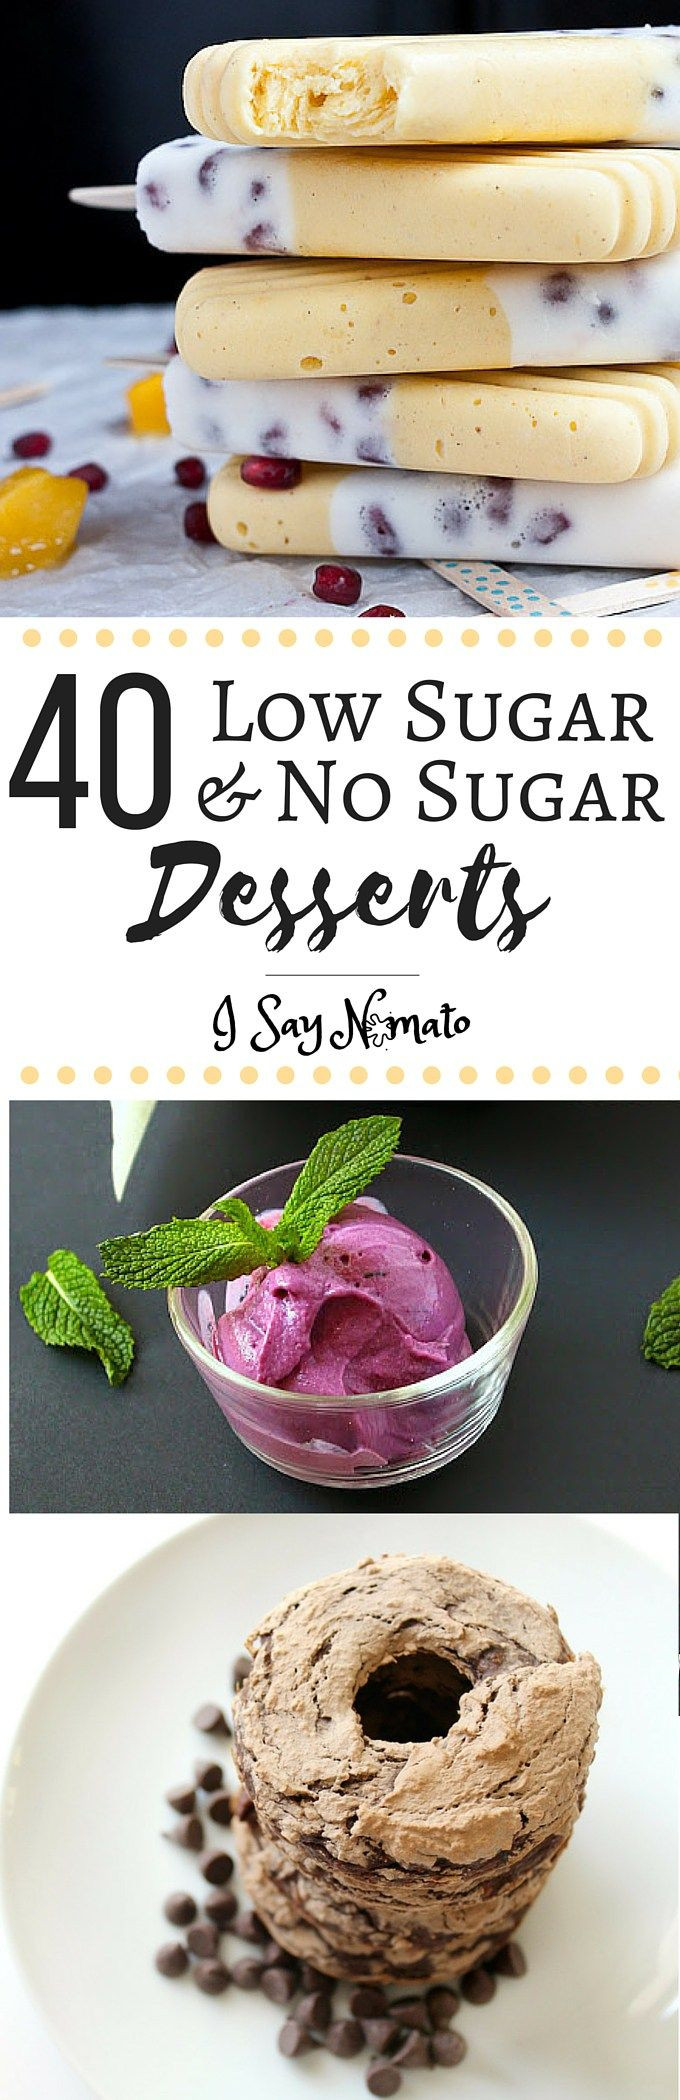 No Sugar Desserts For Diabetics
 20 best images about no sugar t on Pinterest